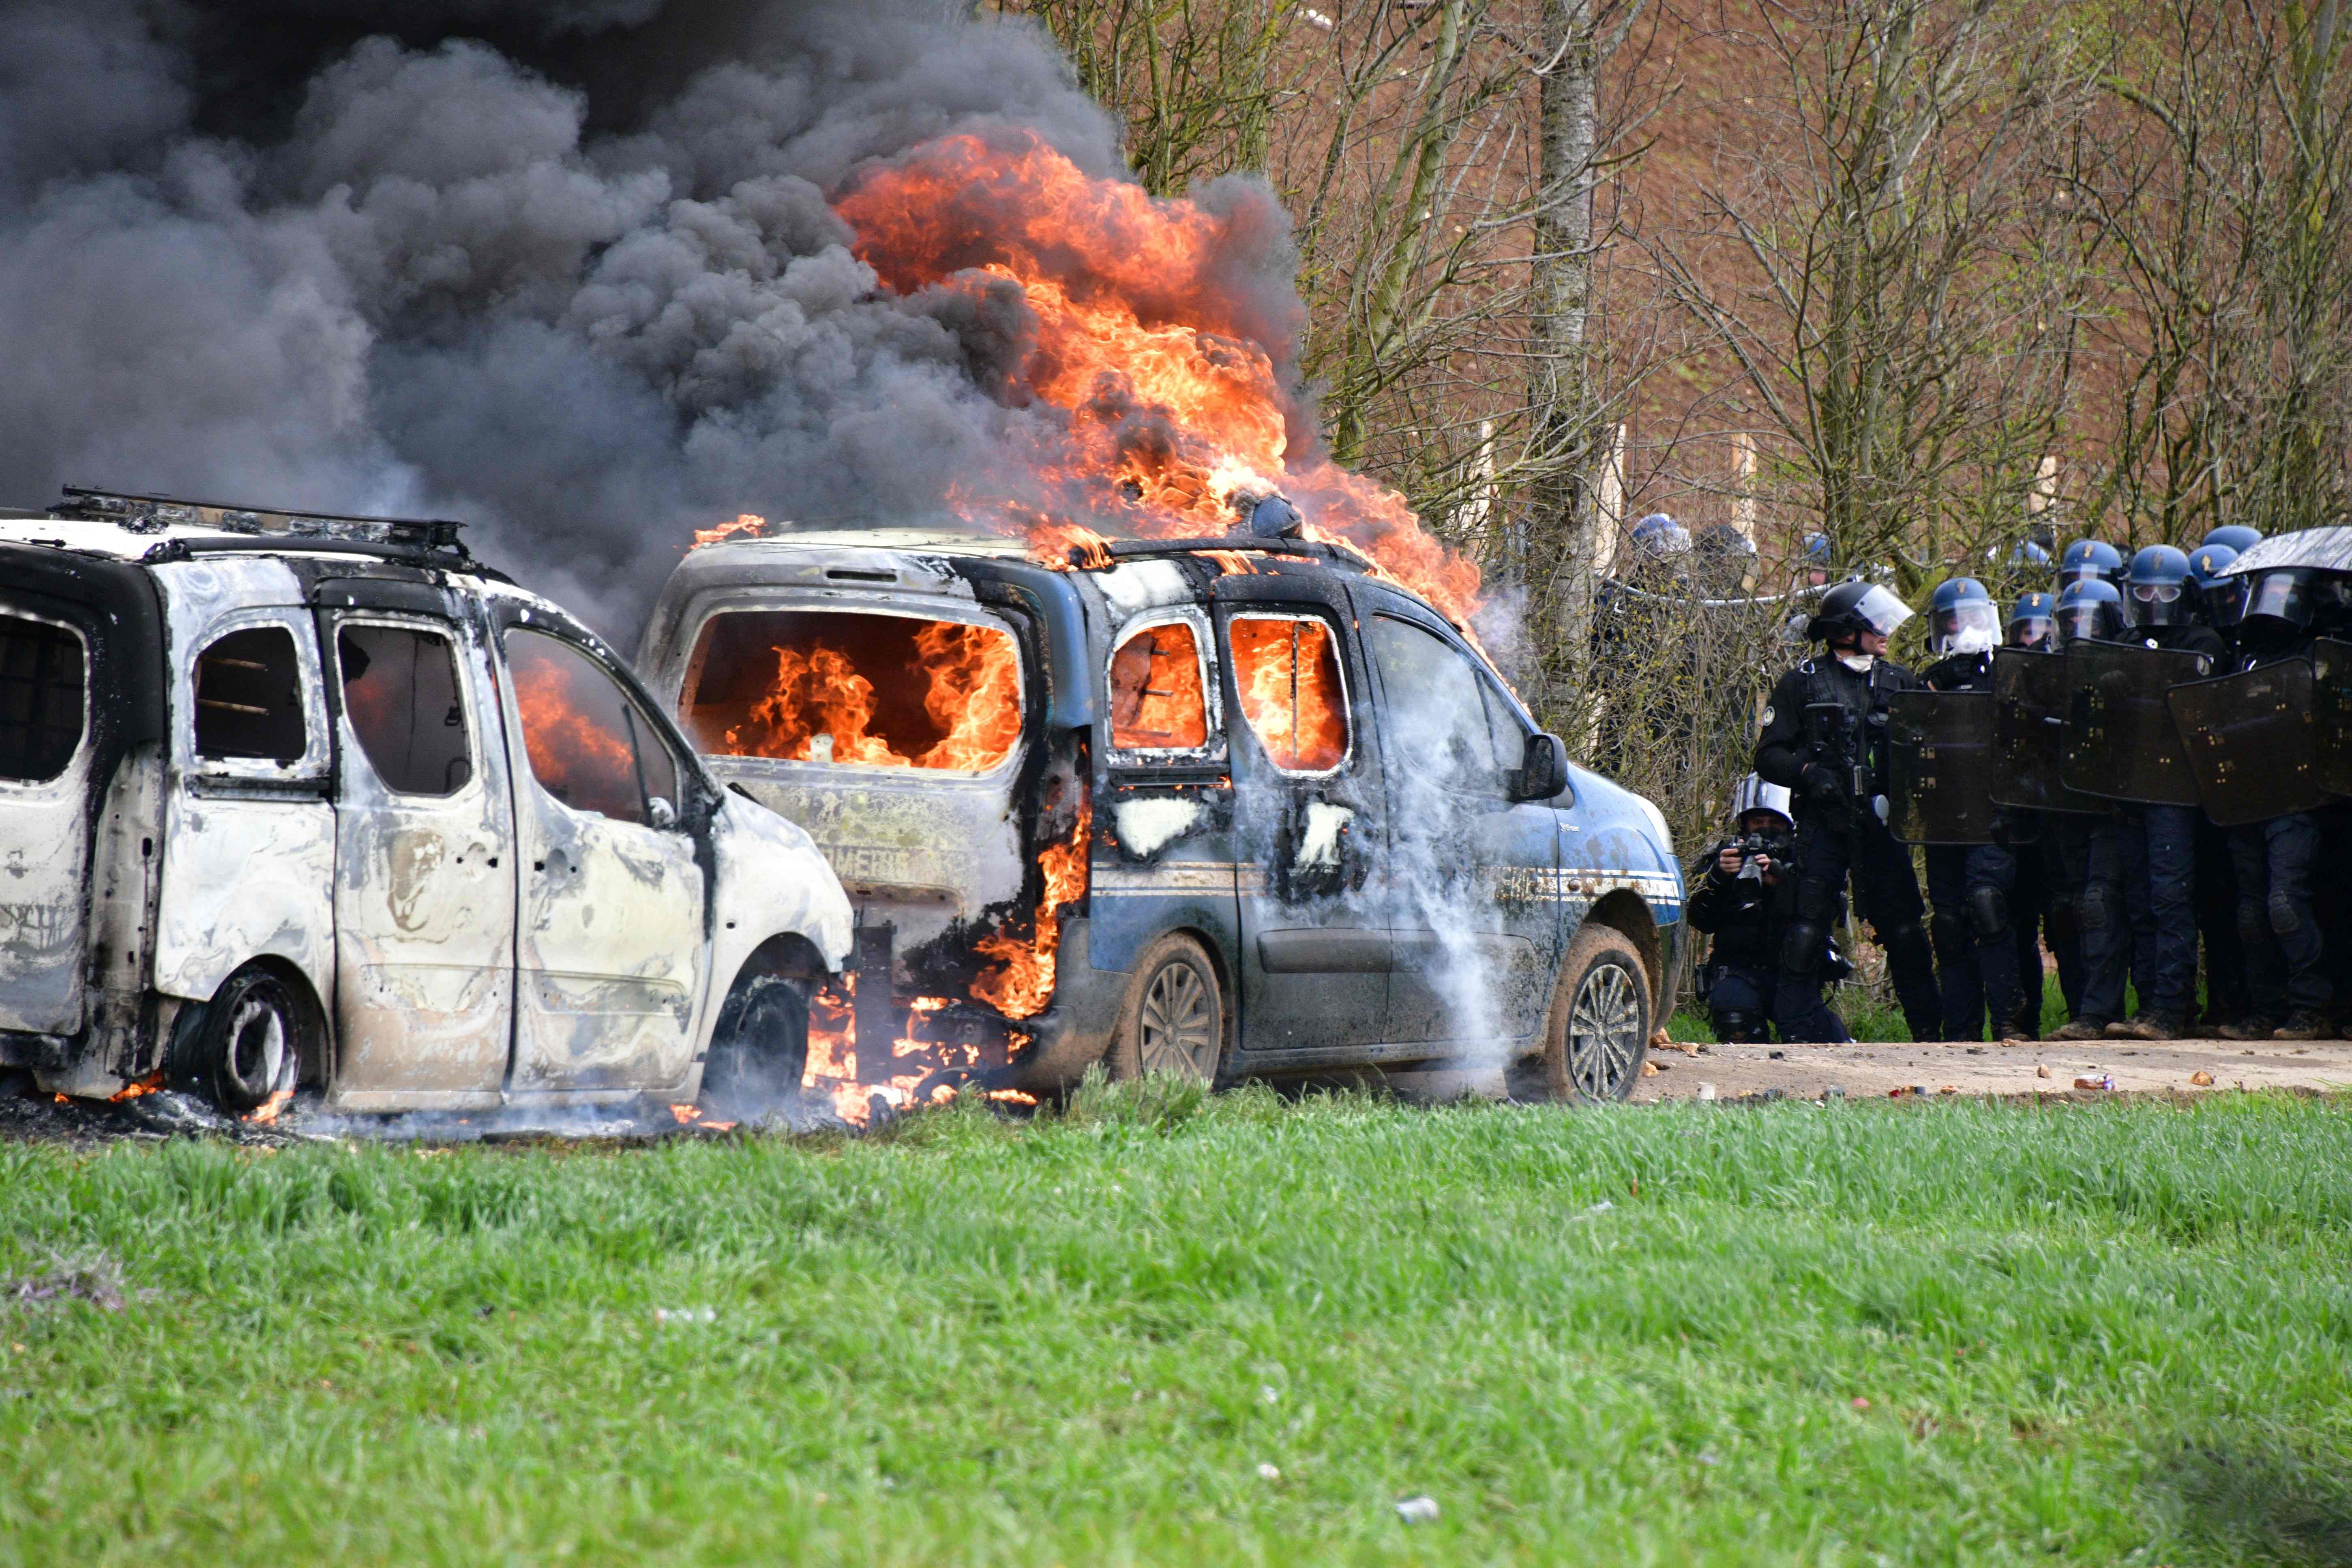 A gendarmerie vehicle burns during a demonstration in Sainte-Soline, France